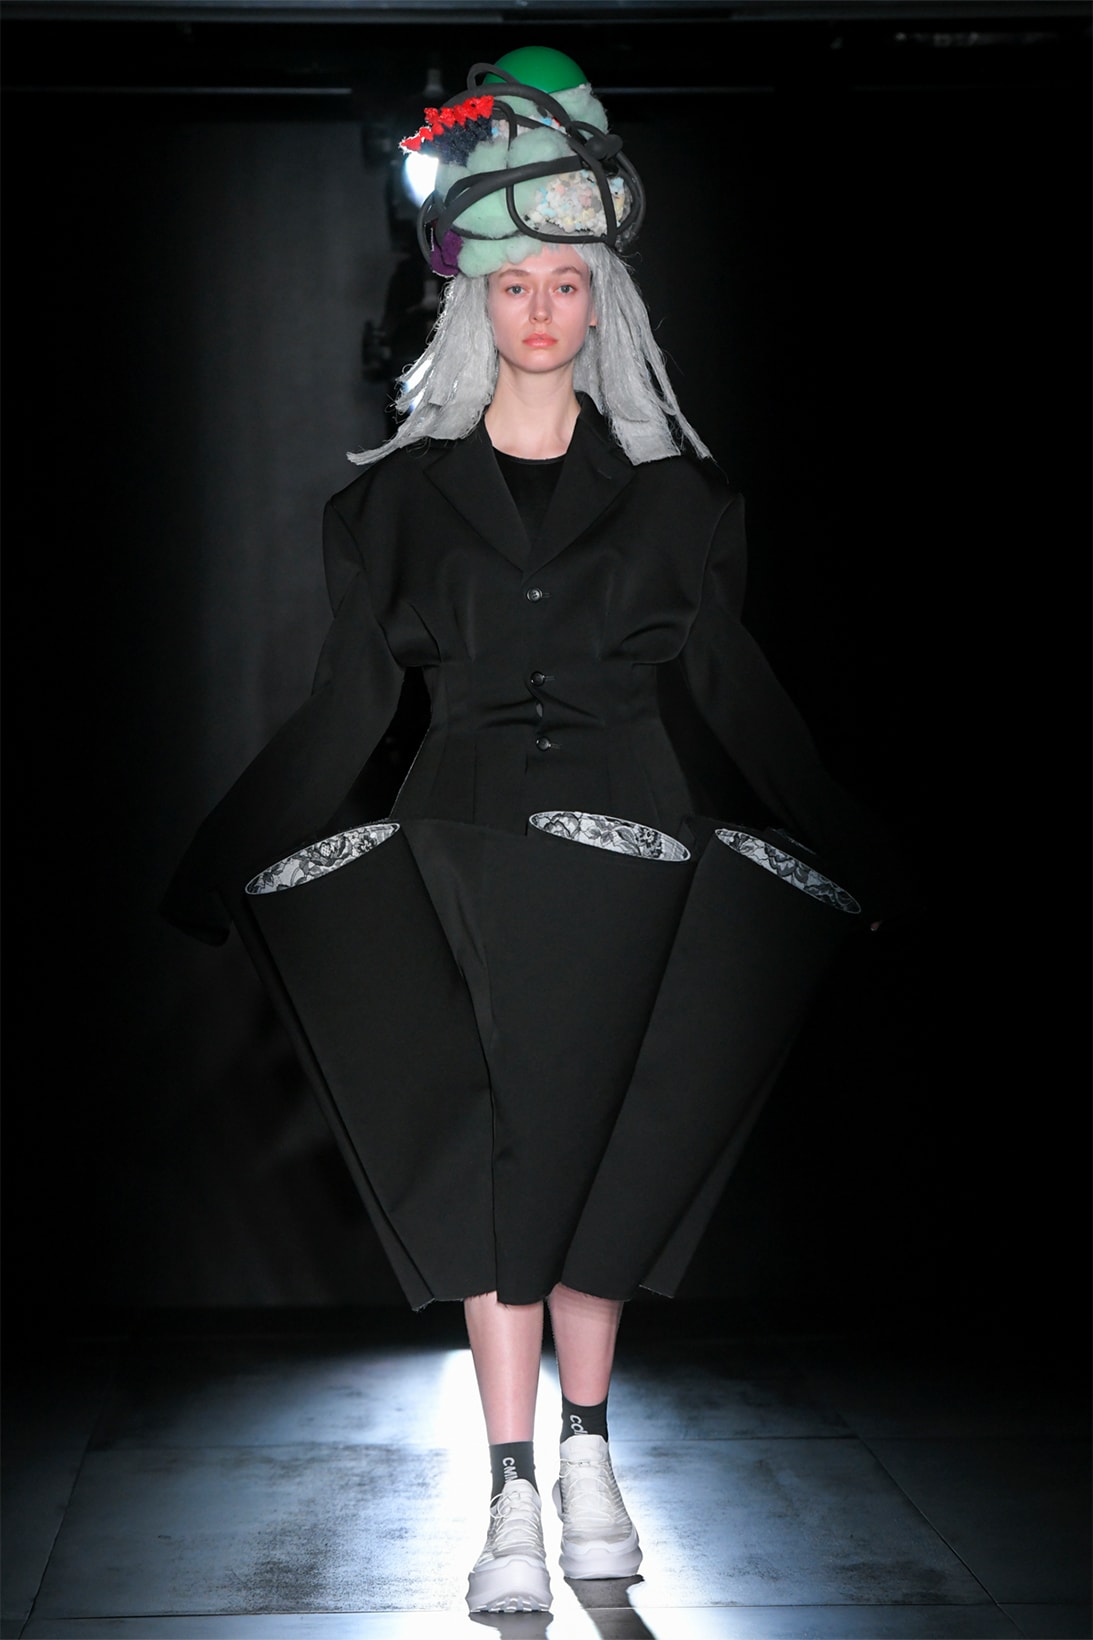 comme des garcons fall winter collection salomon pulsar platform tokyo runway show coat headpiece black